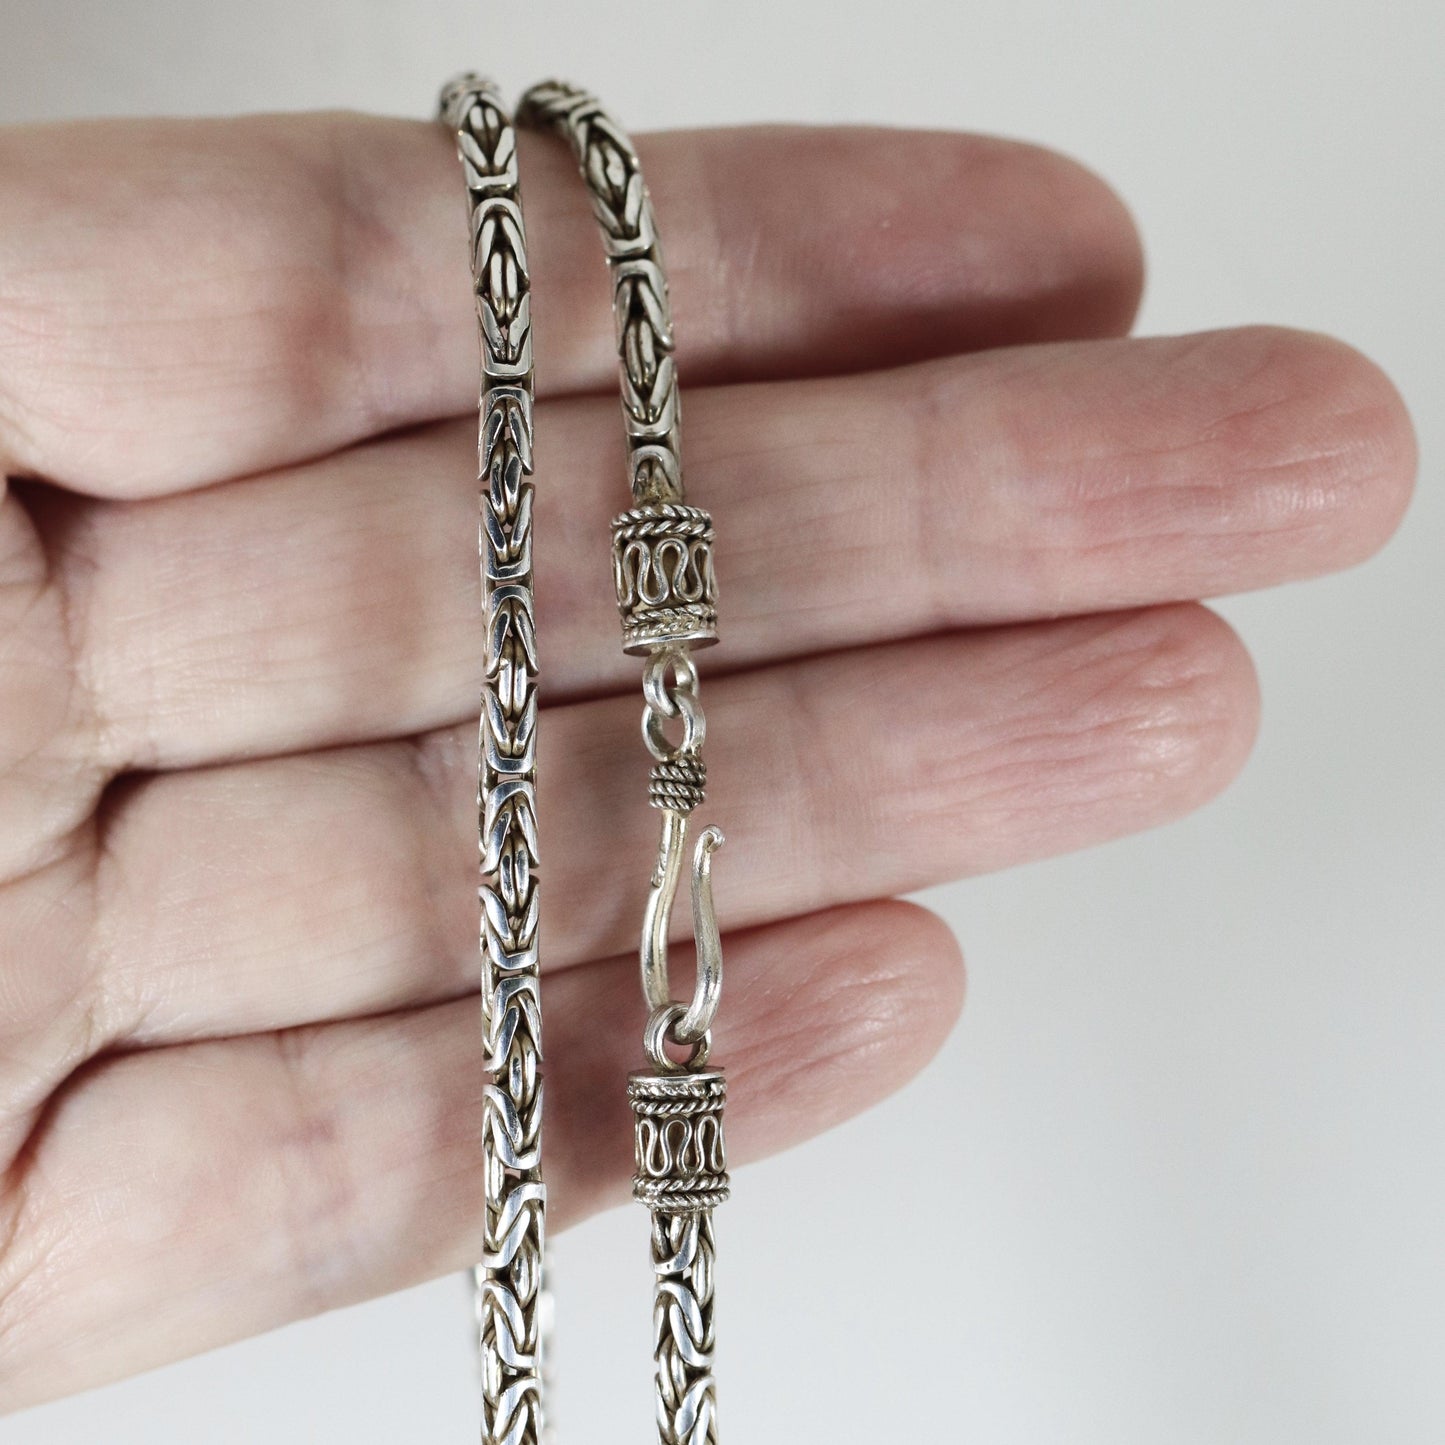 Vintage Silver Jewelry | Byzantine Chain Link Necklace 19.5" 3mm - Carmel Fine Silver Jewelry